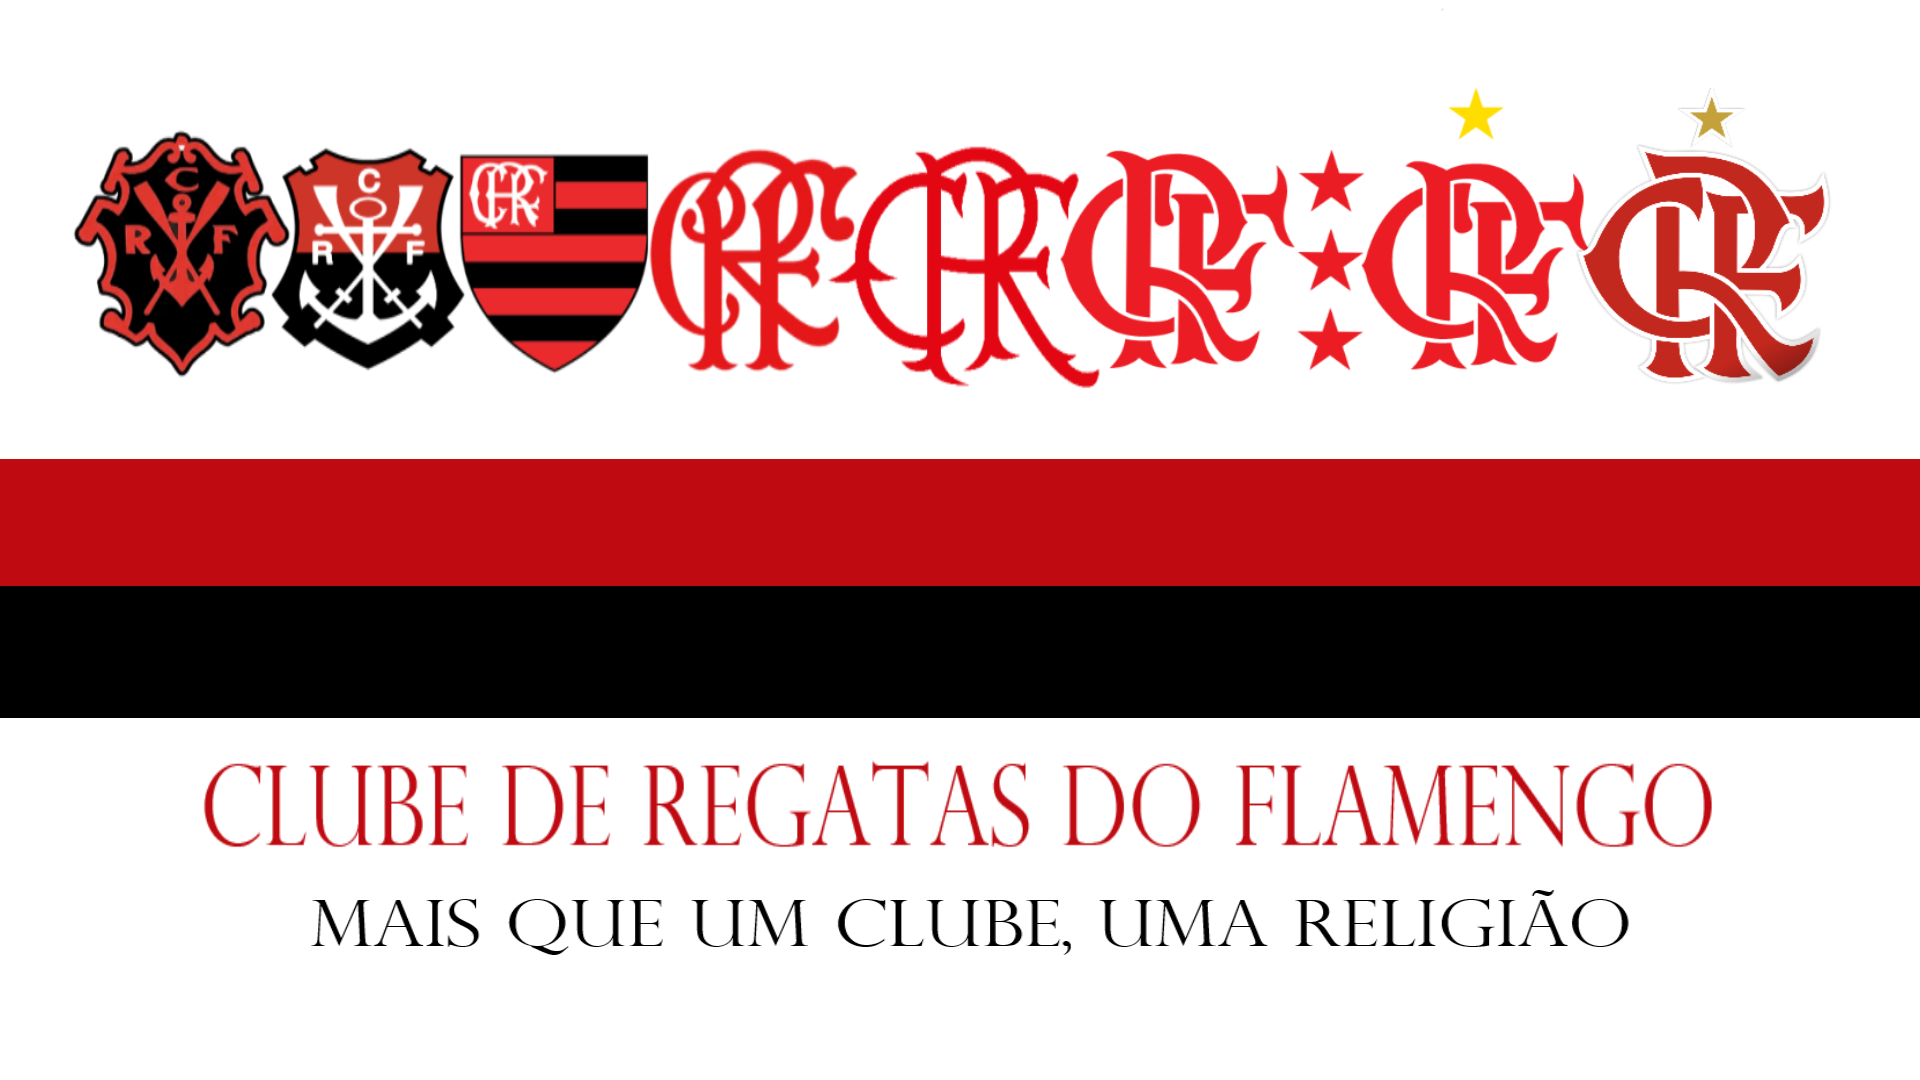 Clube de Regatas do Flamengo Picture by Lucho0